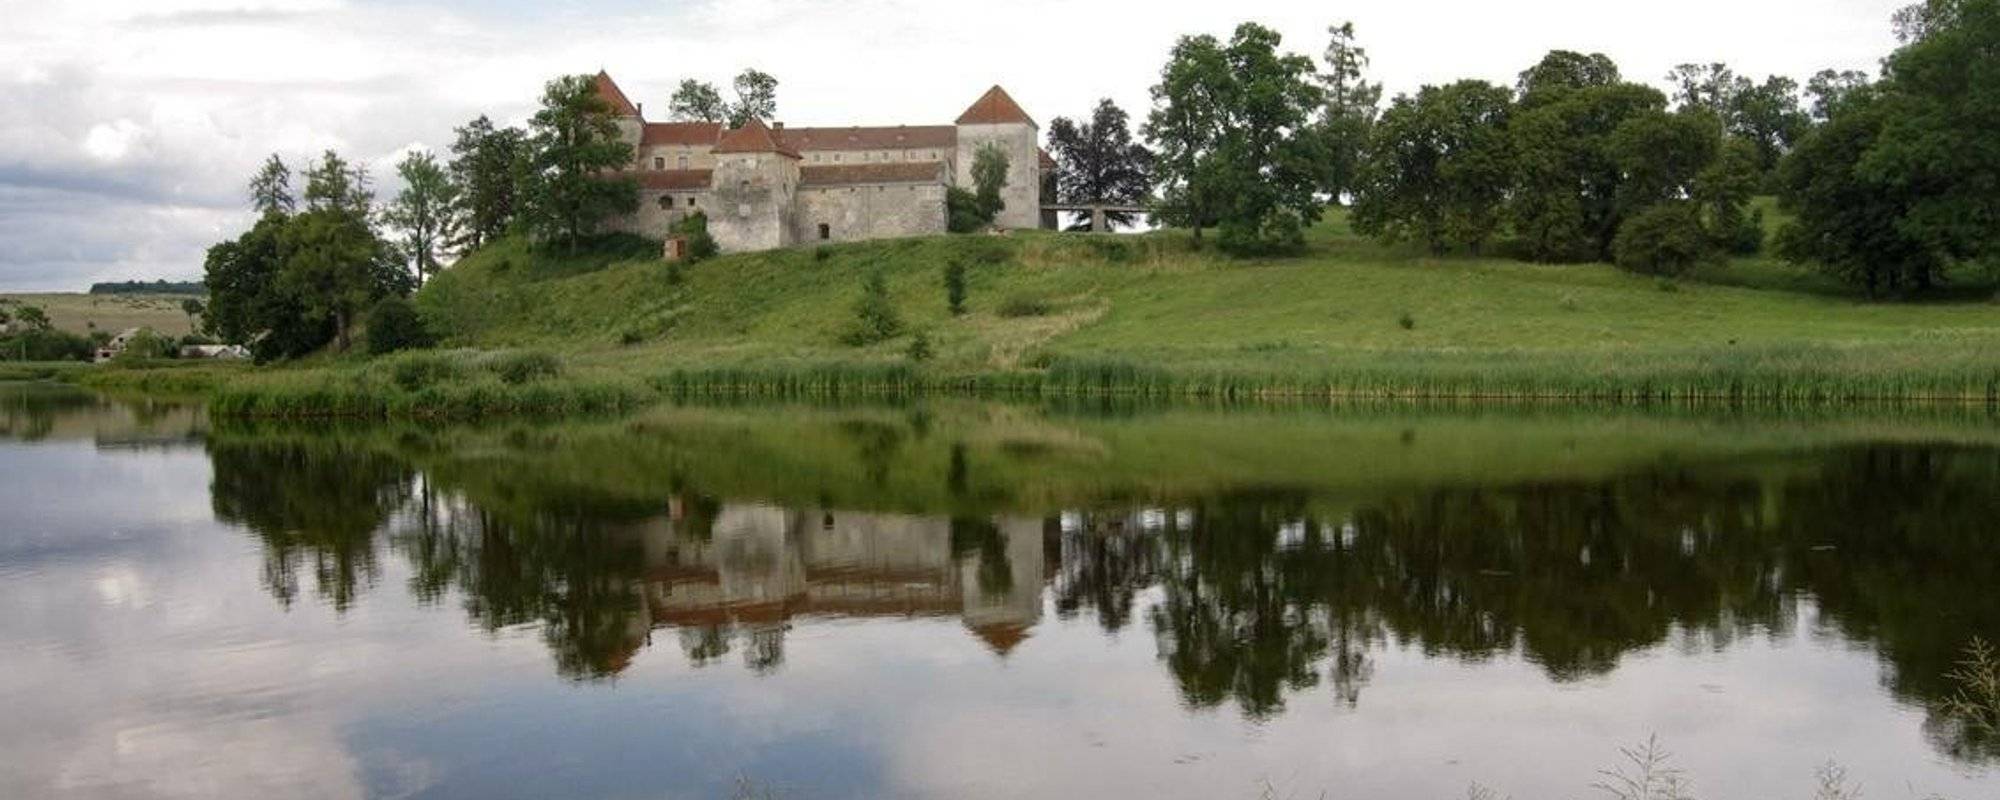 Discover Ukraine. Svirzh Castle